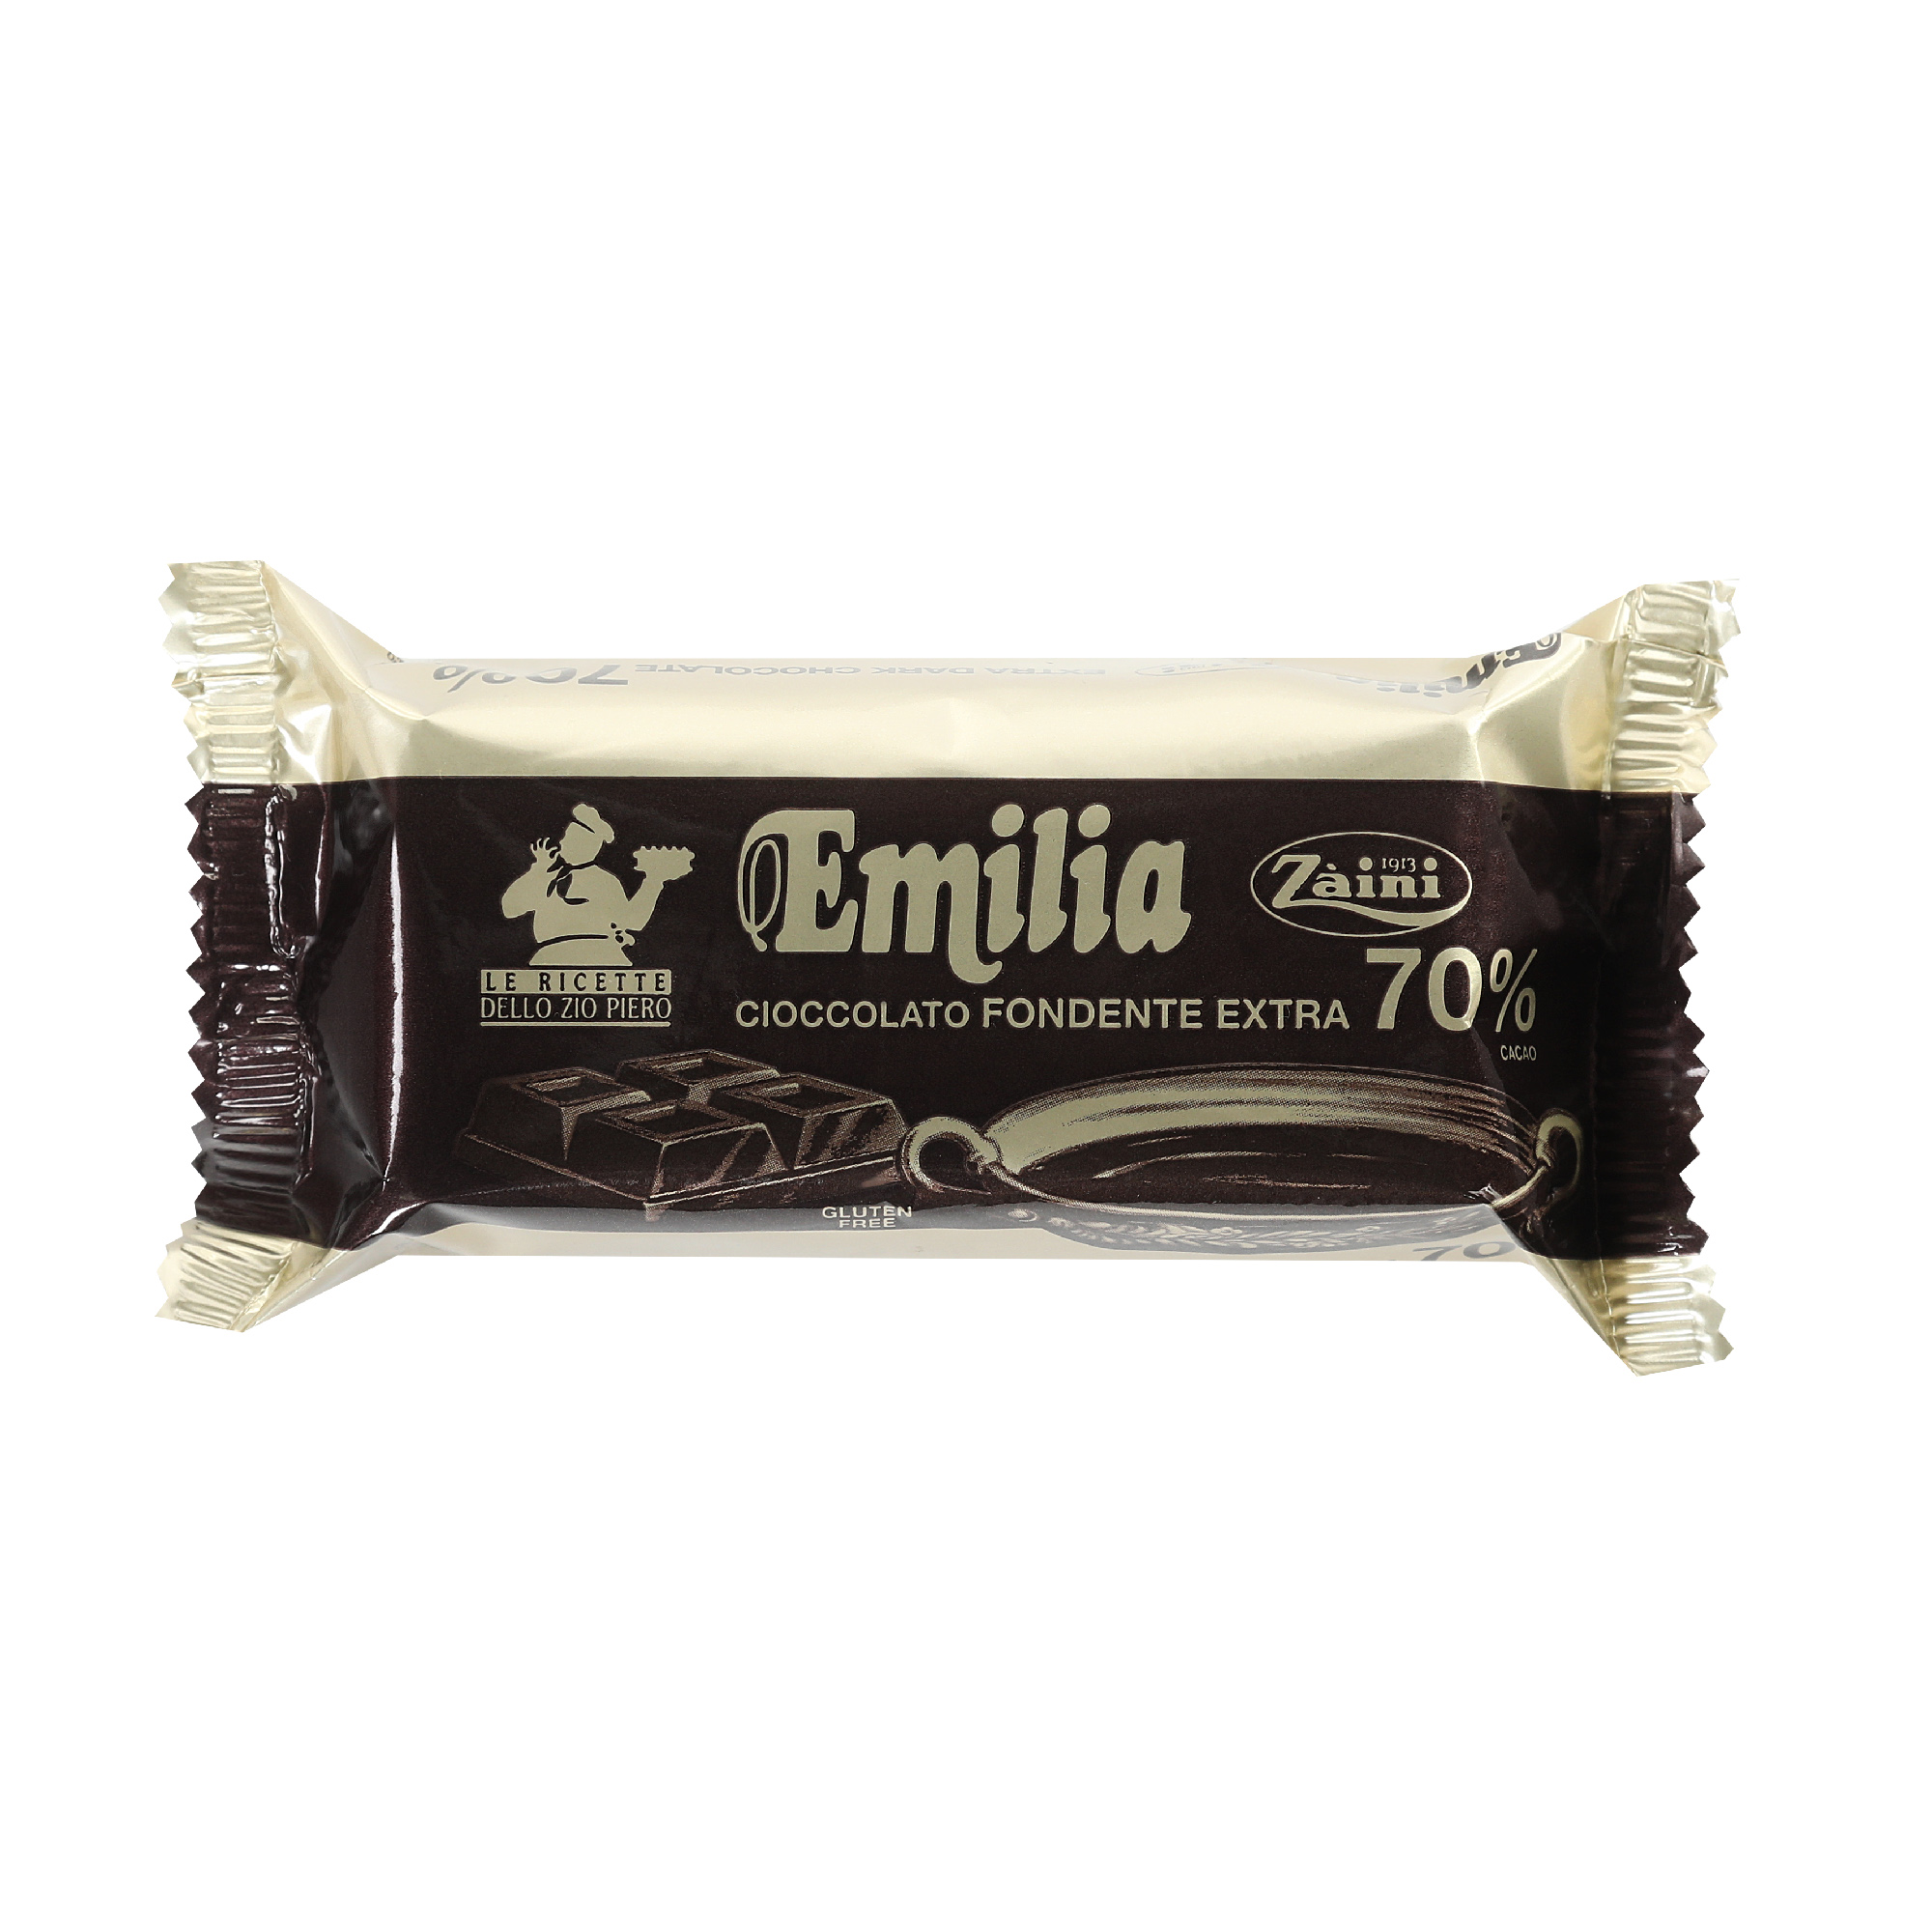 Шоколад темный 70% Zaini Emilia, 200 г шоколад темный 70% zaini emilia 200 г